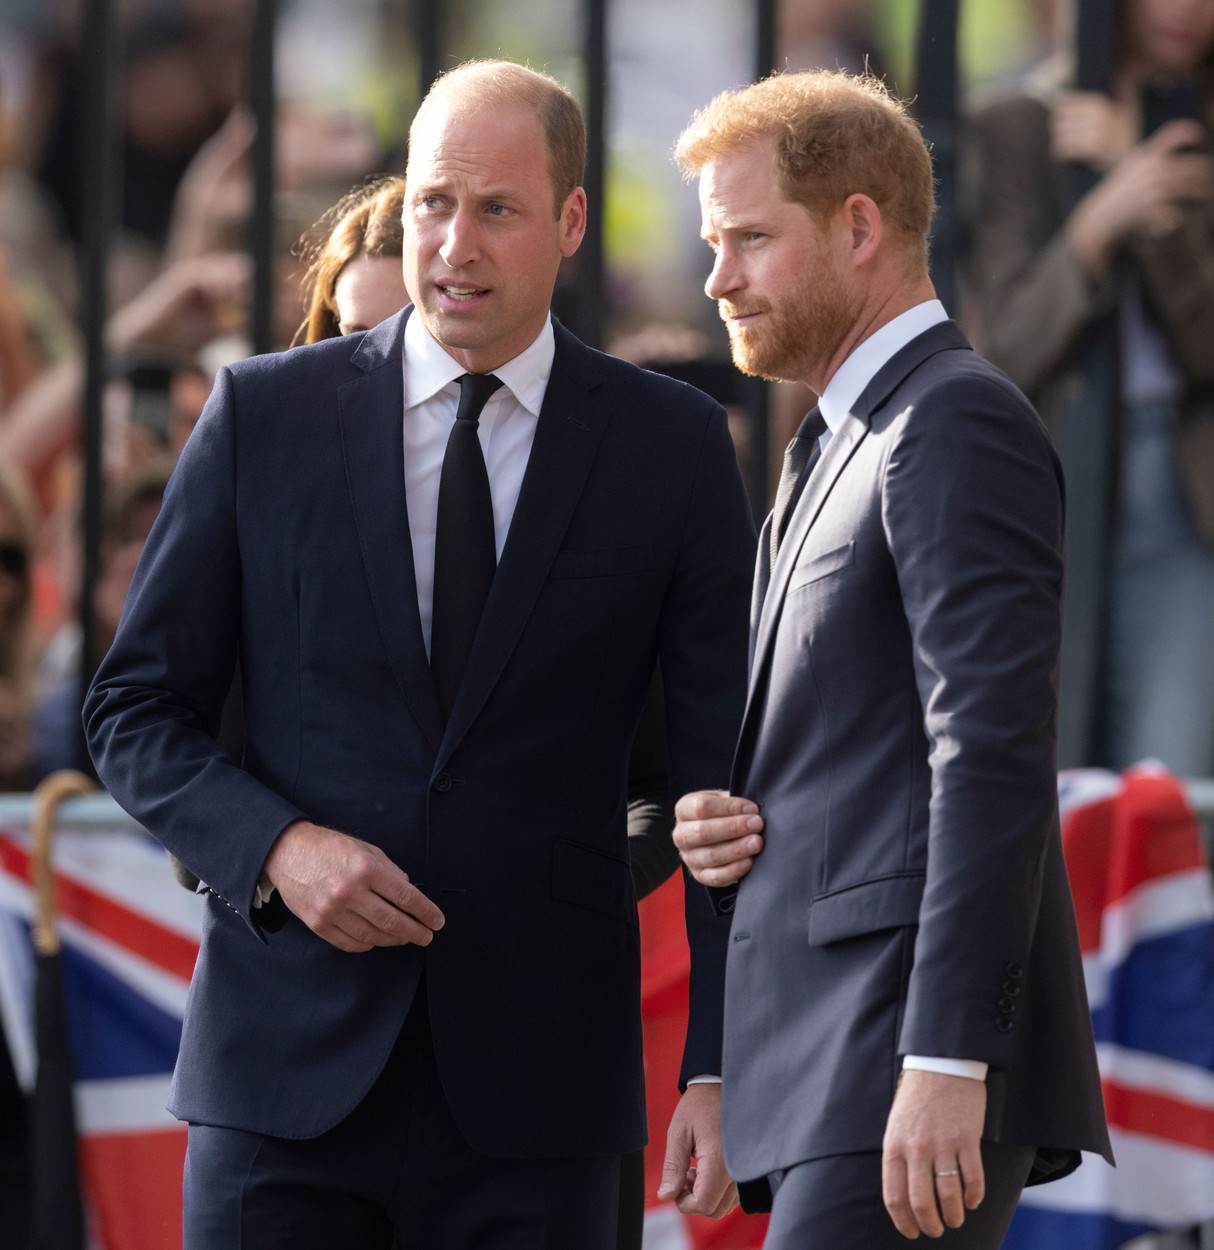 Princ William pozvao je princa Harryja i Meghan Mafrkle da se pridruže njemu i Kate Middleton u šetnji Windsorom